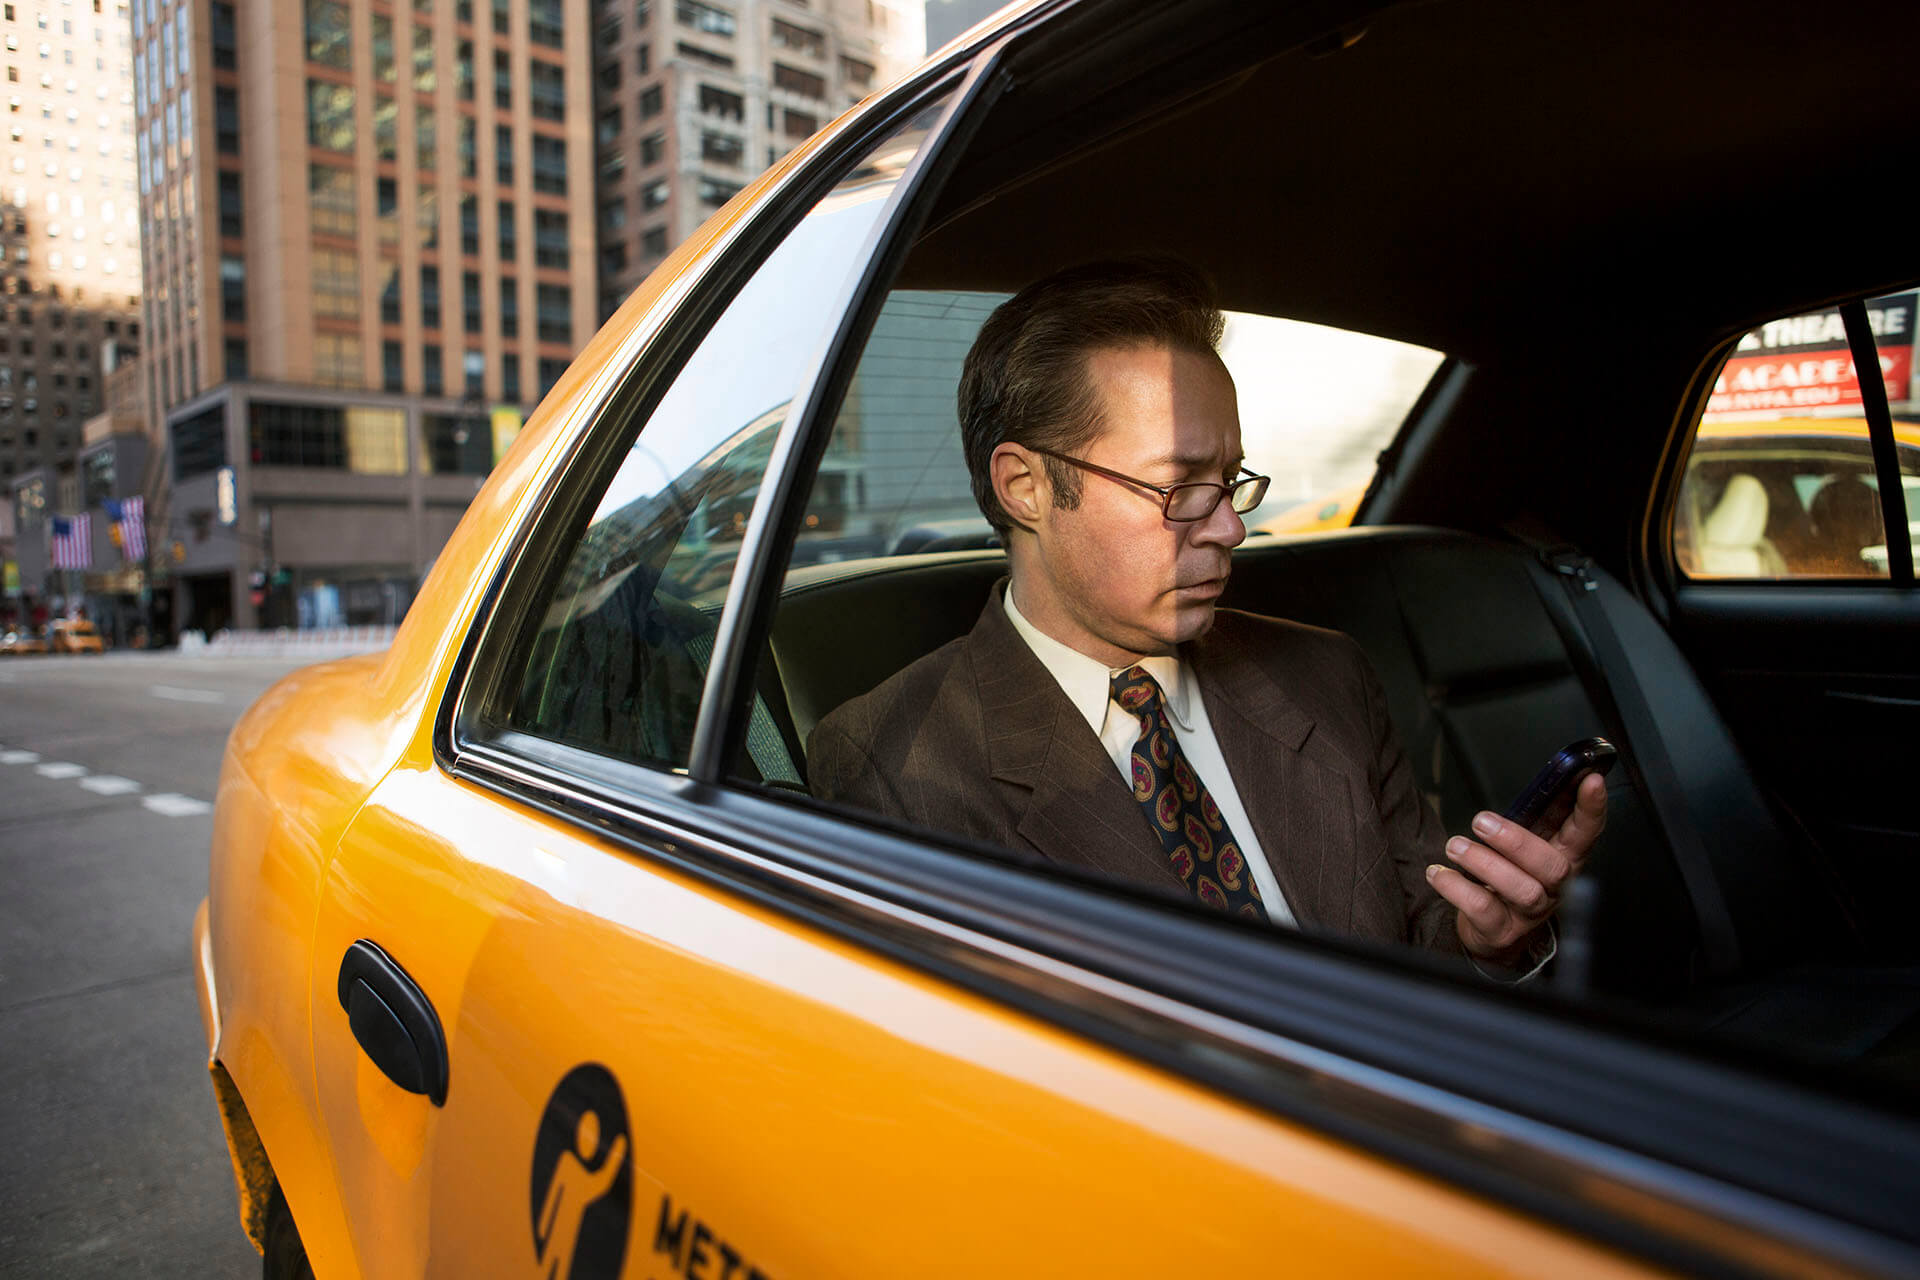 businessman-using-mobile-phone-in-taxi-2022-05-26-00-57-42-utc.jpg